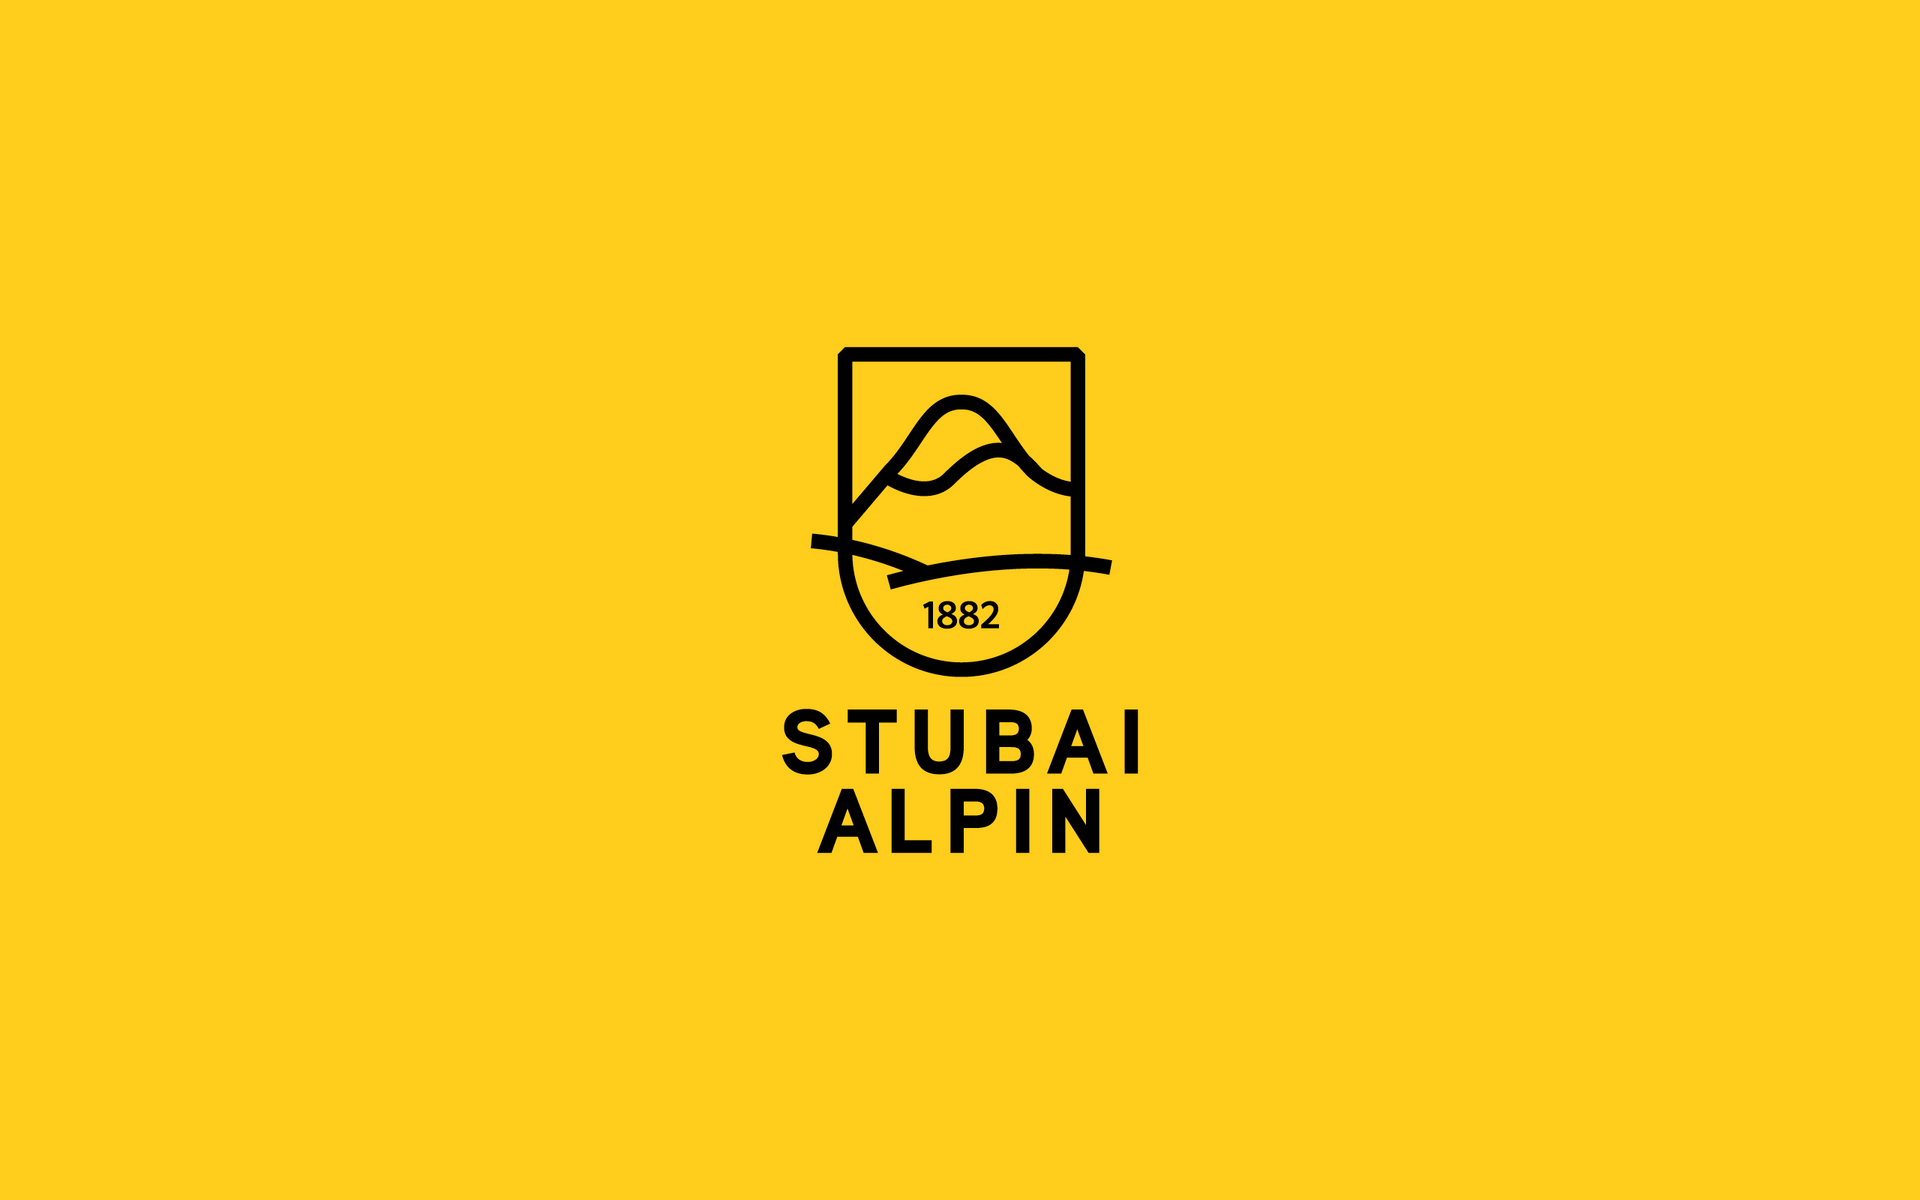 Stubai Alpin